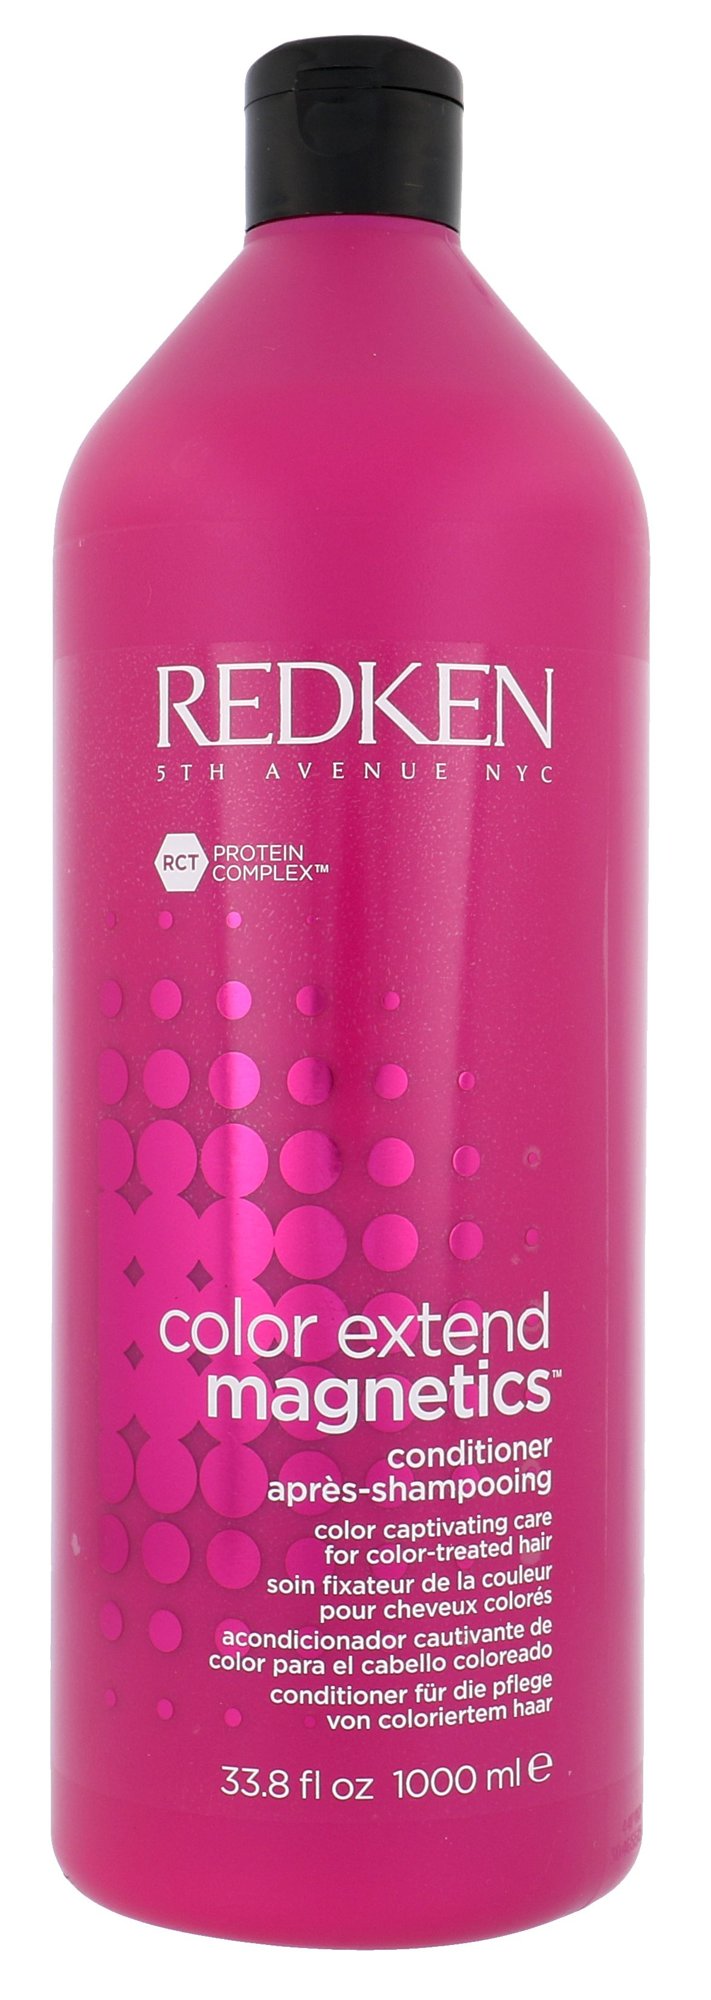 Redken Color Extend Magnetics 1000ml kondicionierius